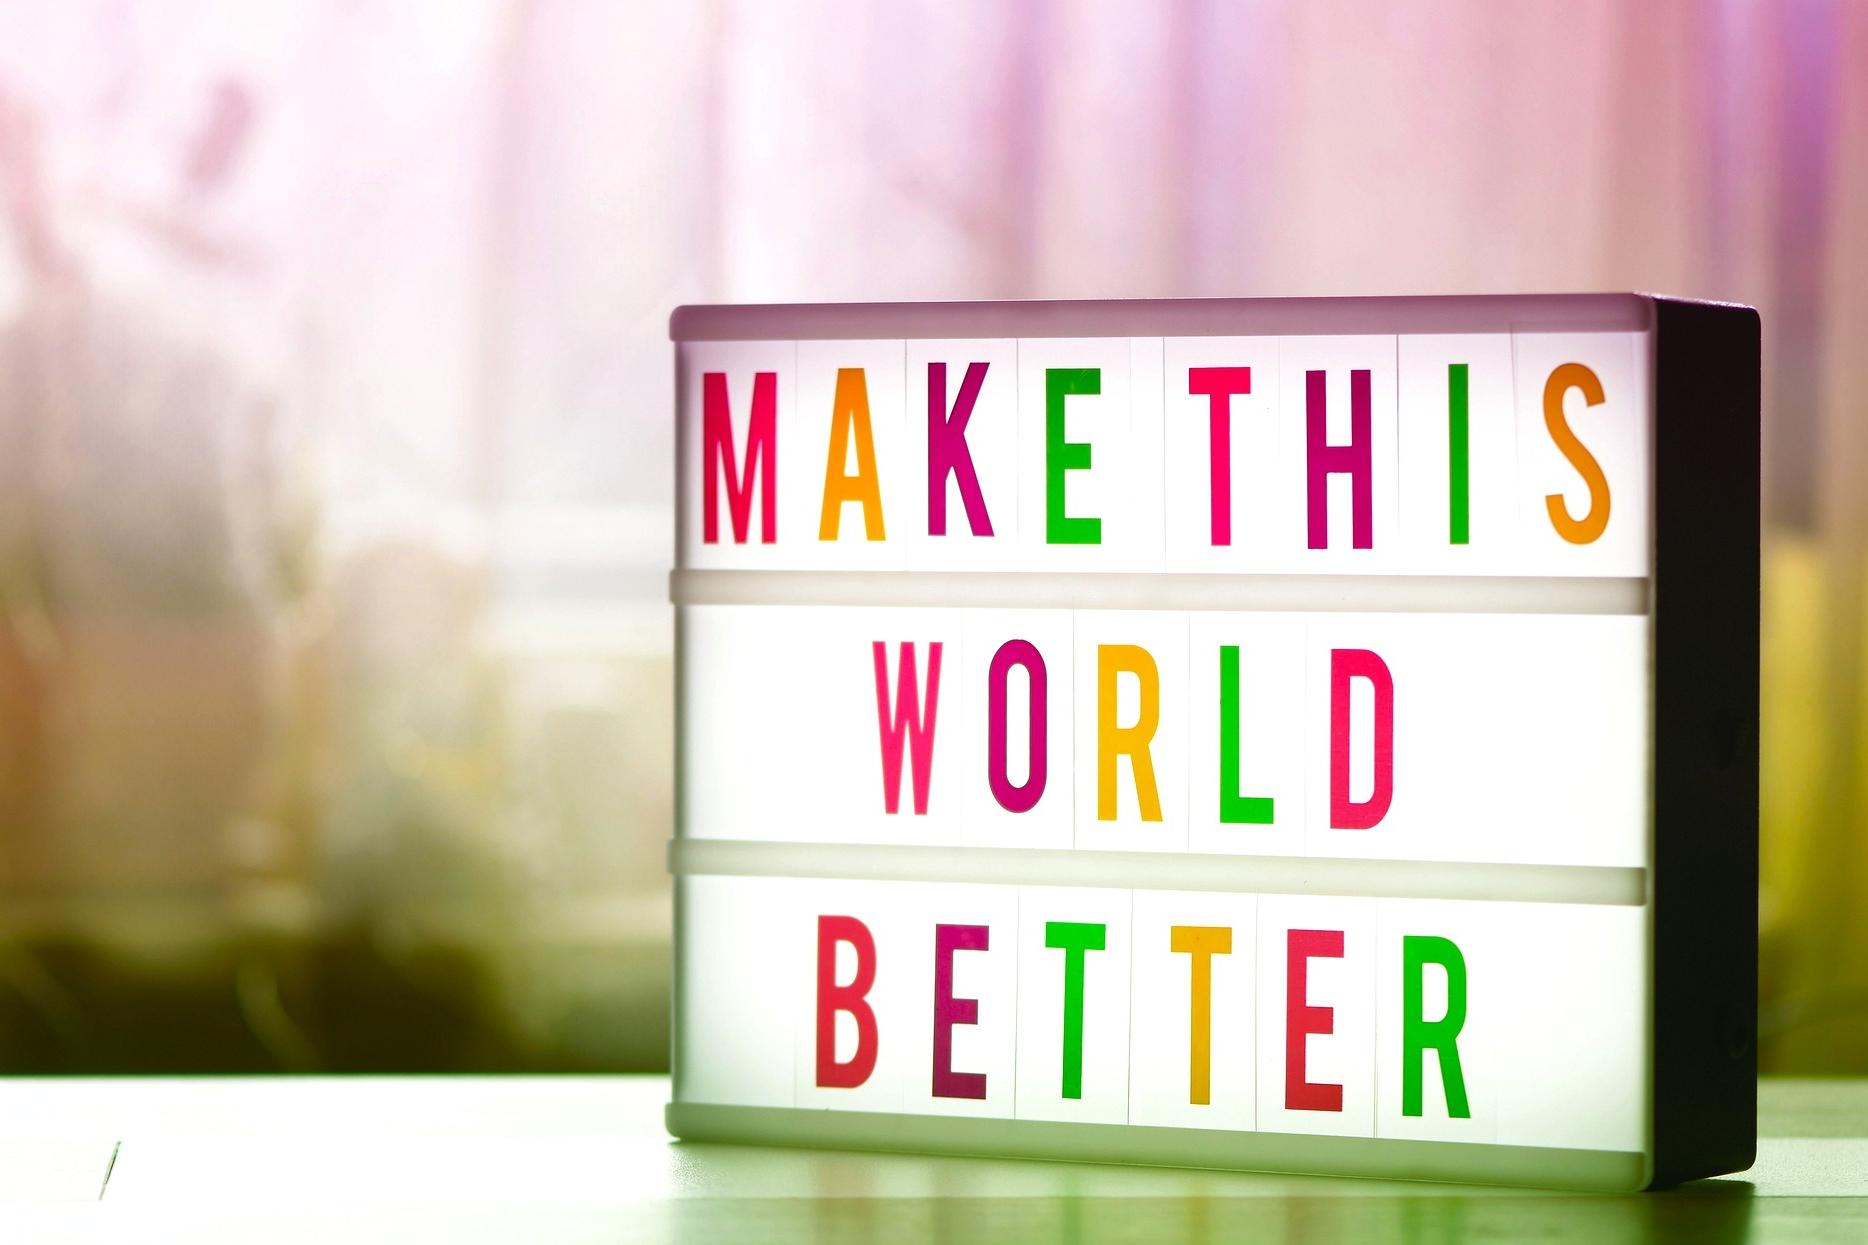 Texttafel "Make this world better"